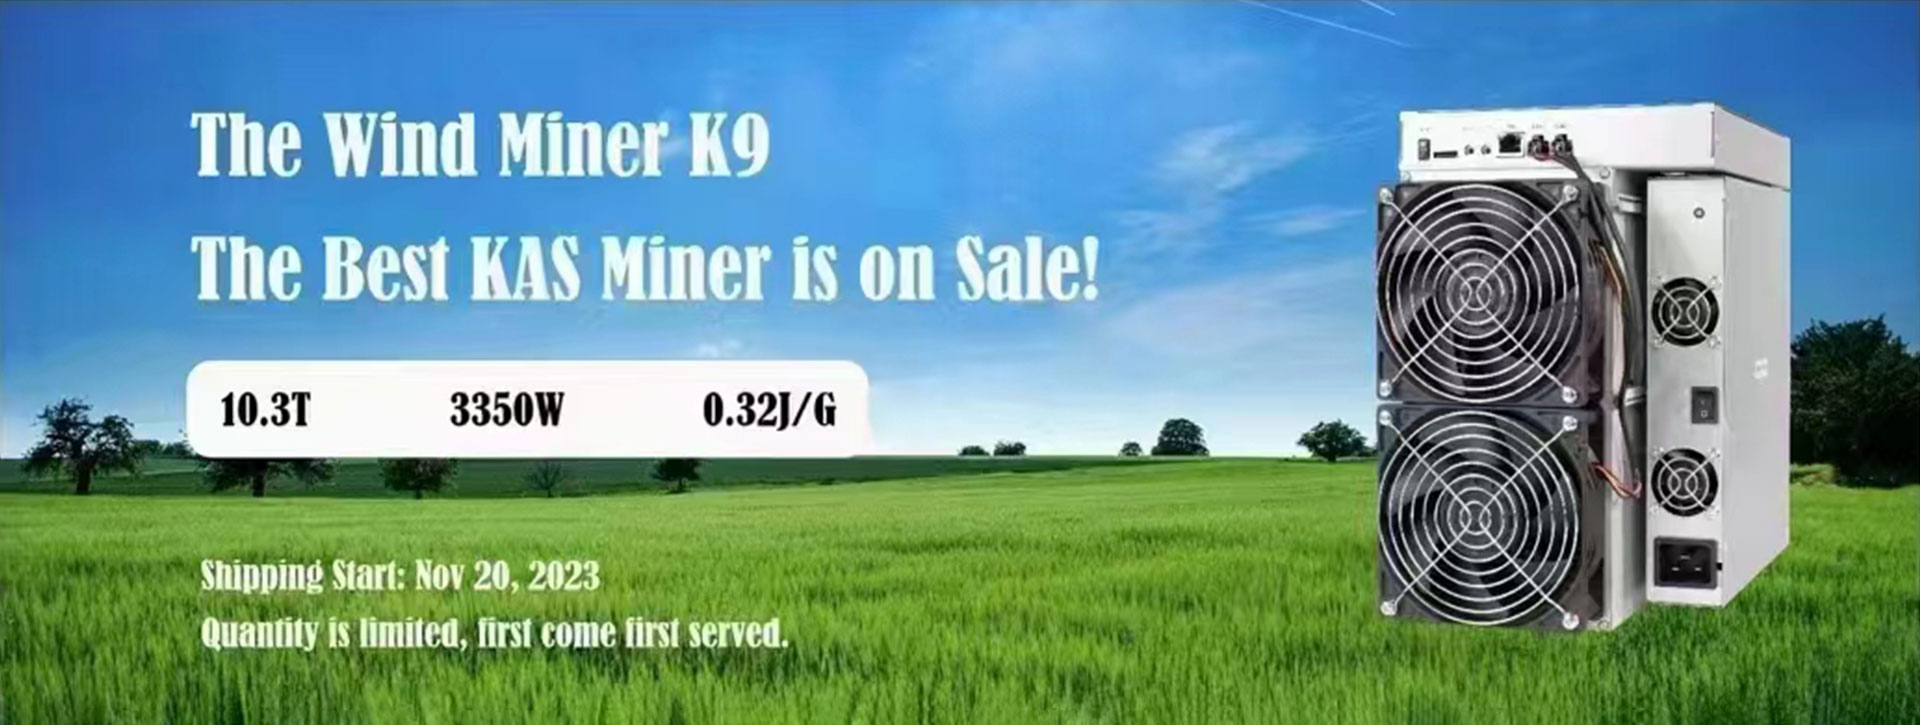 KAS miner K9